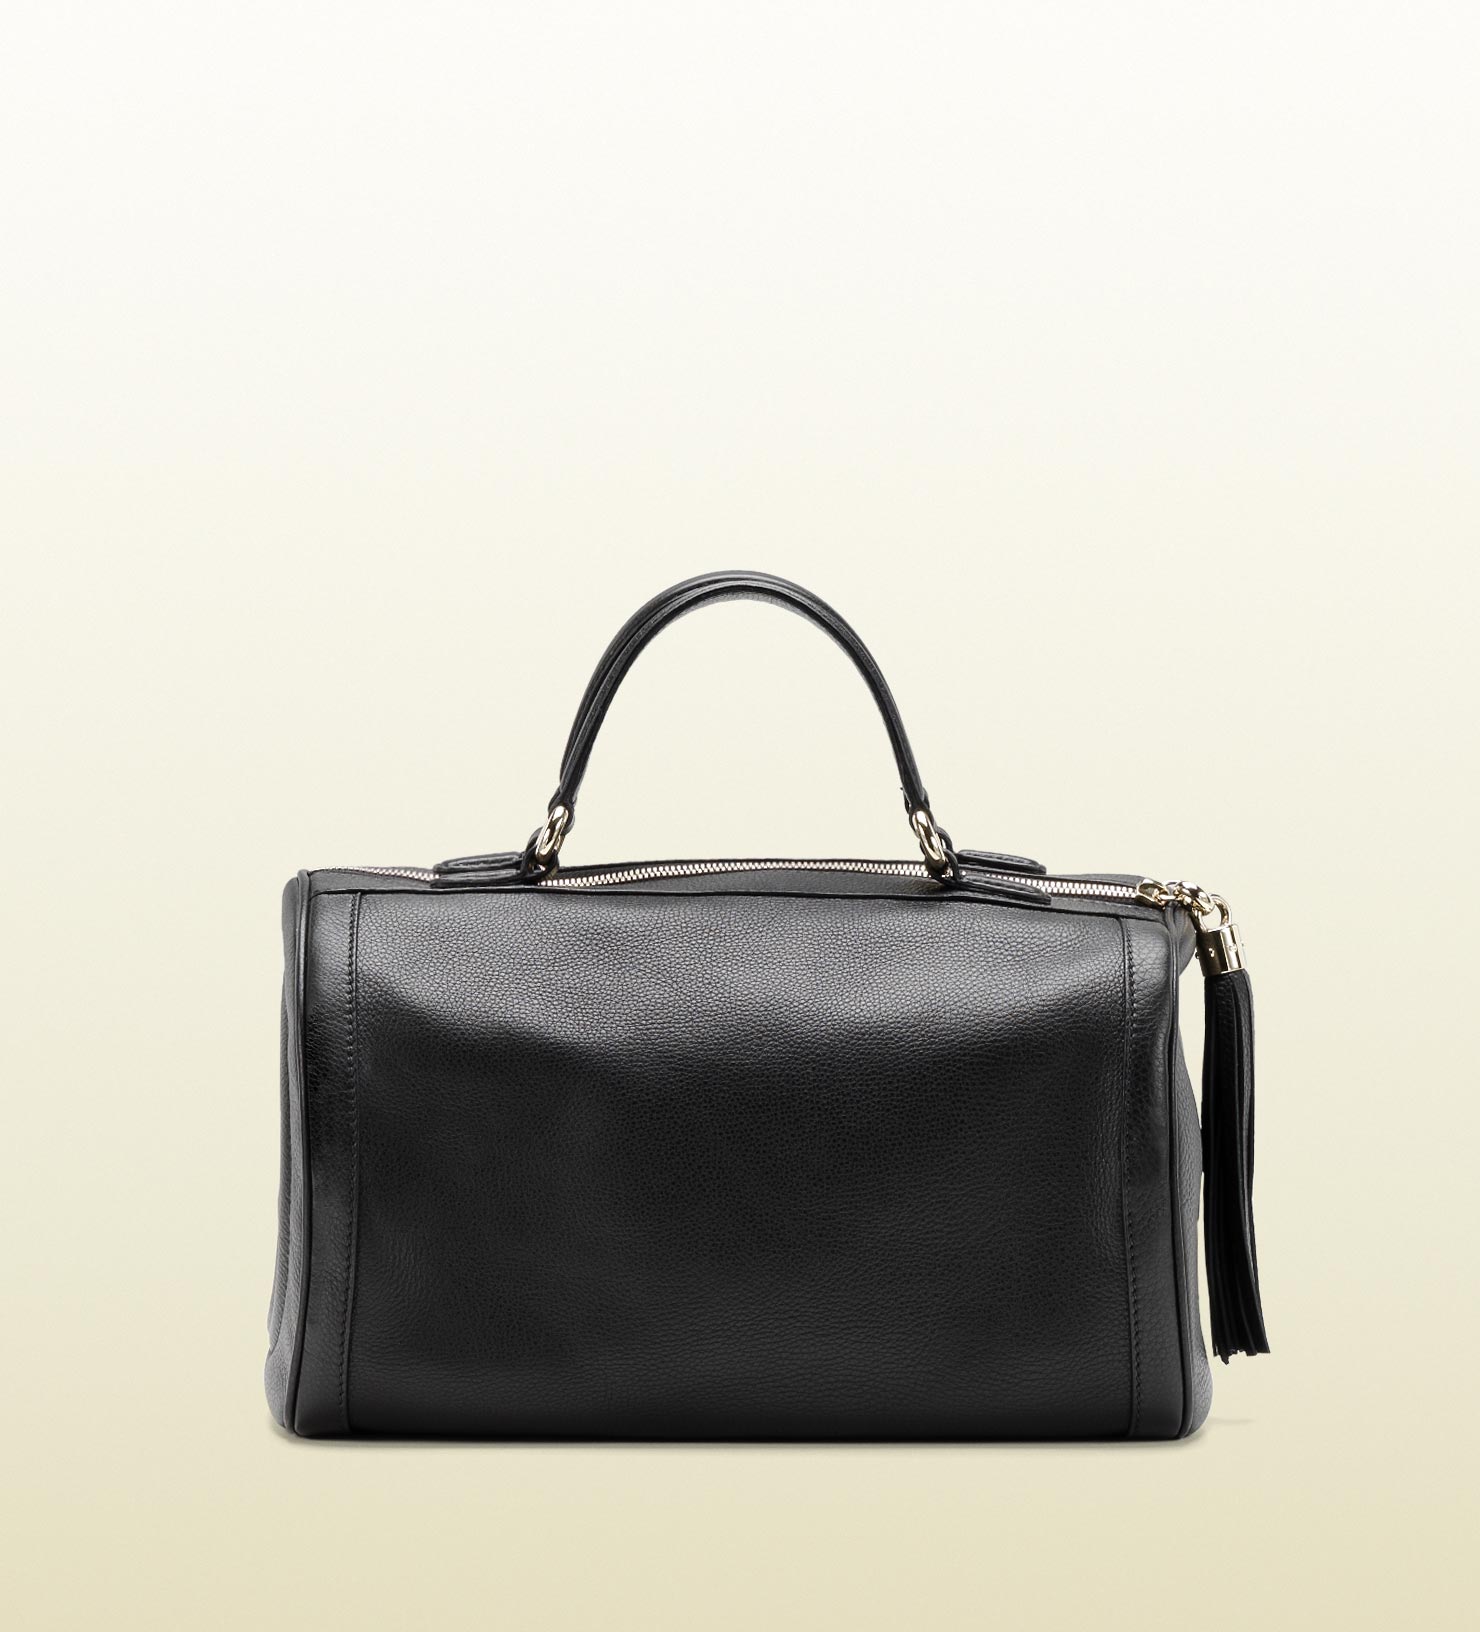 Gucci Soho Boston Bag in Black - Lyst